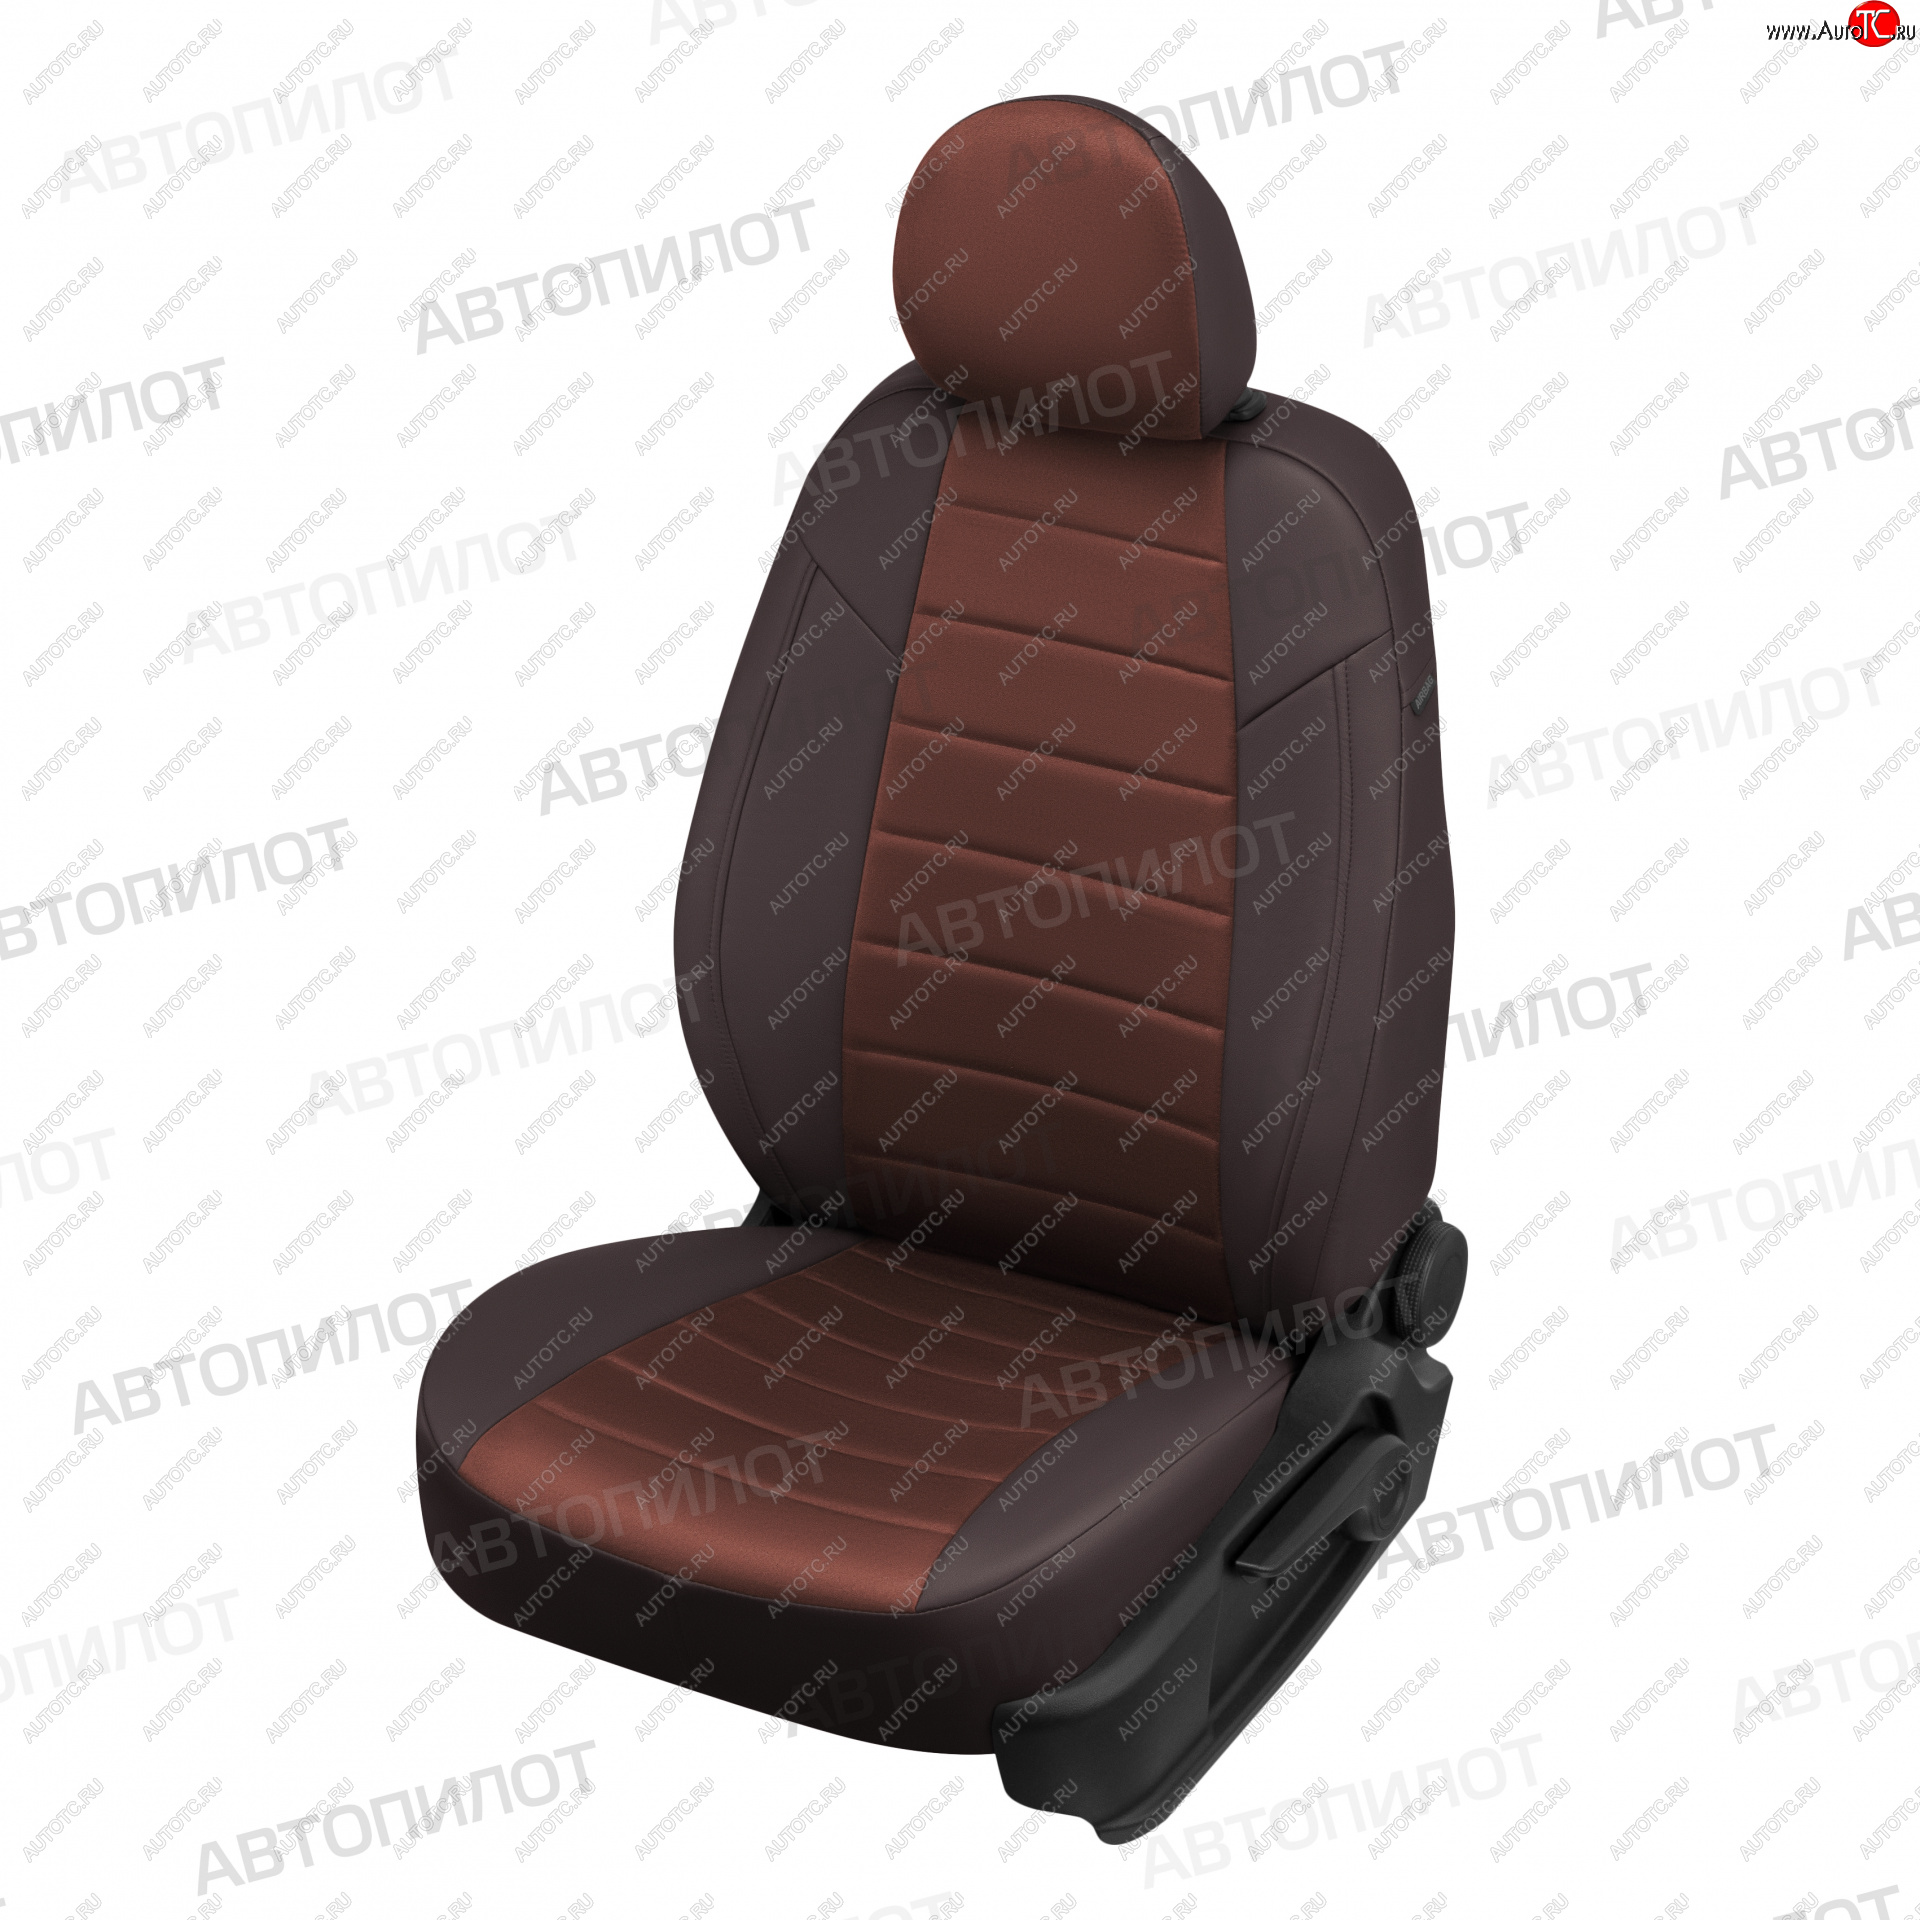 13 449 р. Чехлы сидений (экокожа/алькантара) Автопилот  Hyundai Terracan  1 HP (2001-2007) (шоколад)